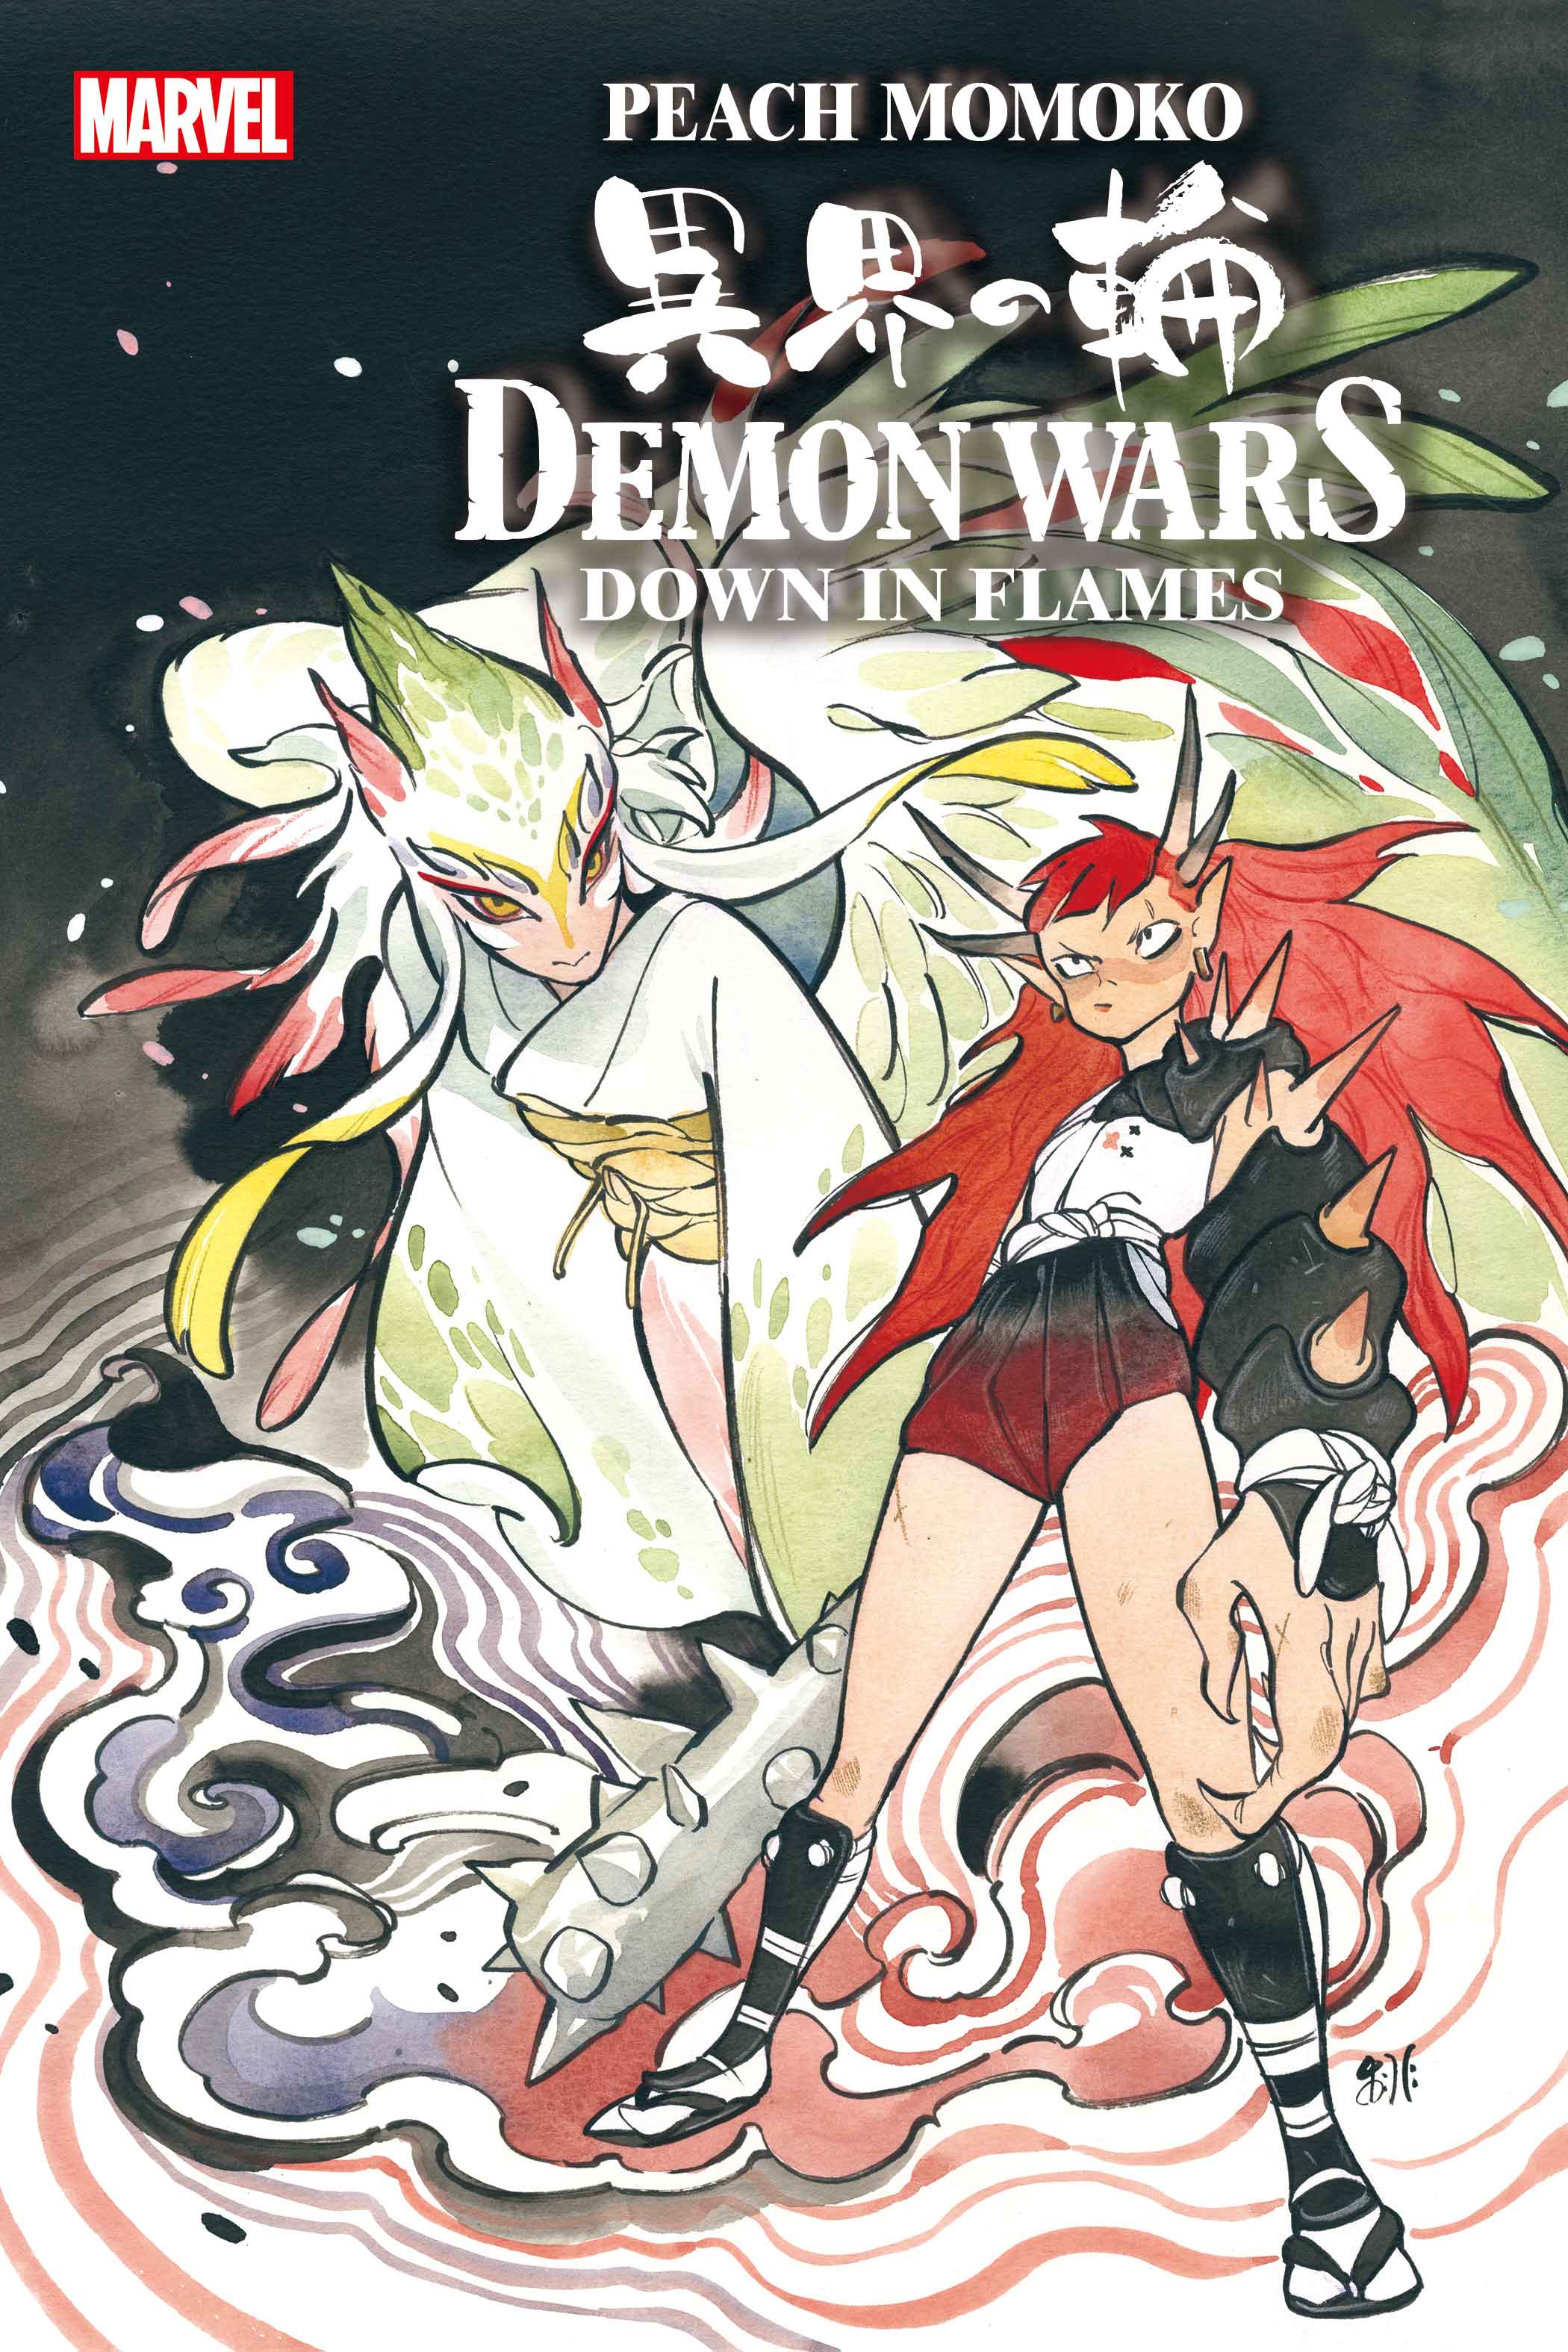 Demon Wars: Down In Flames cover art by peach momoko